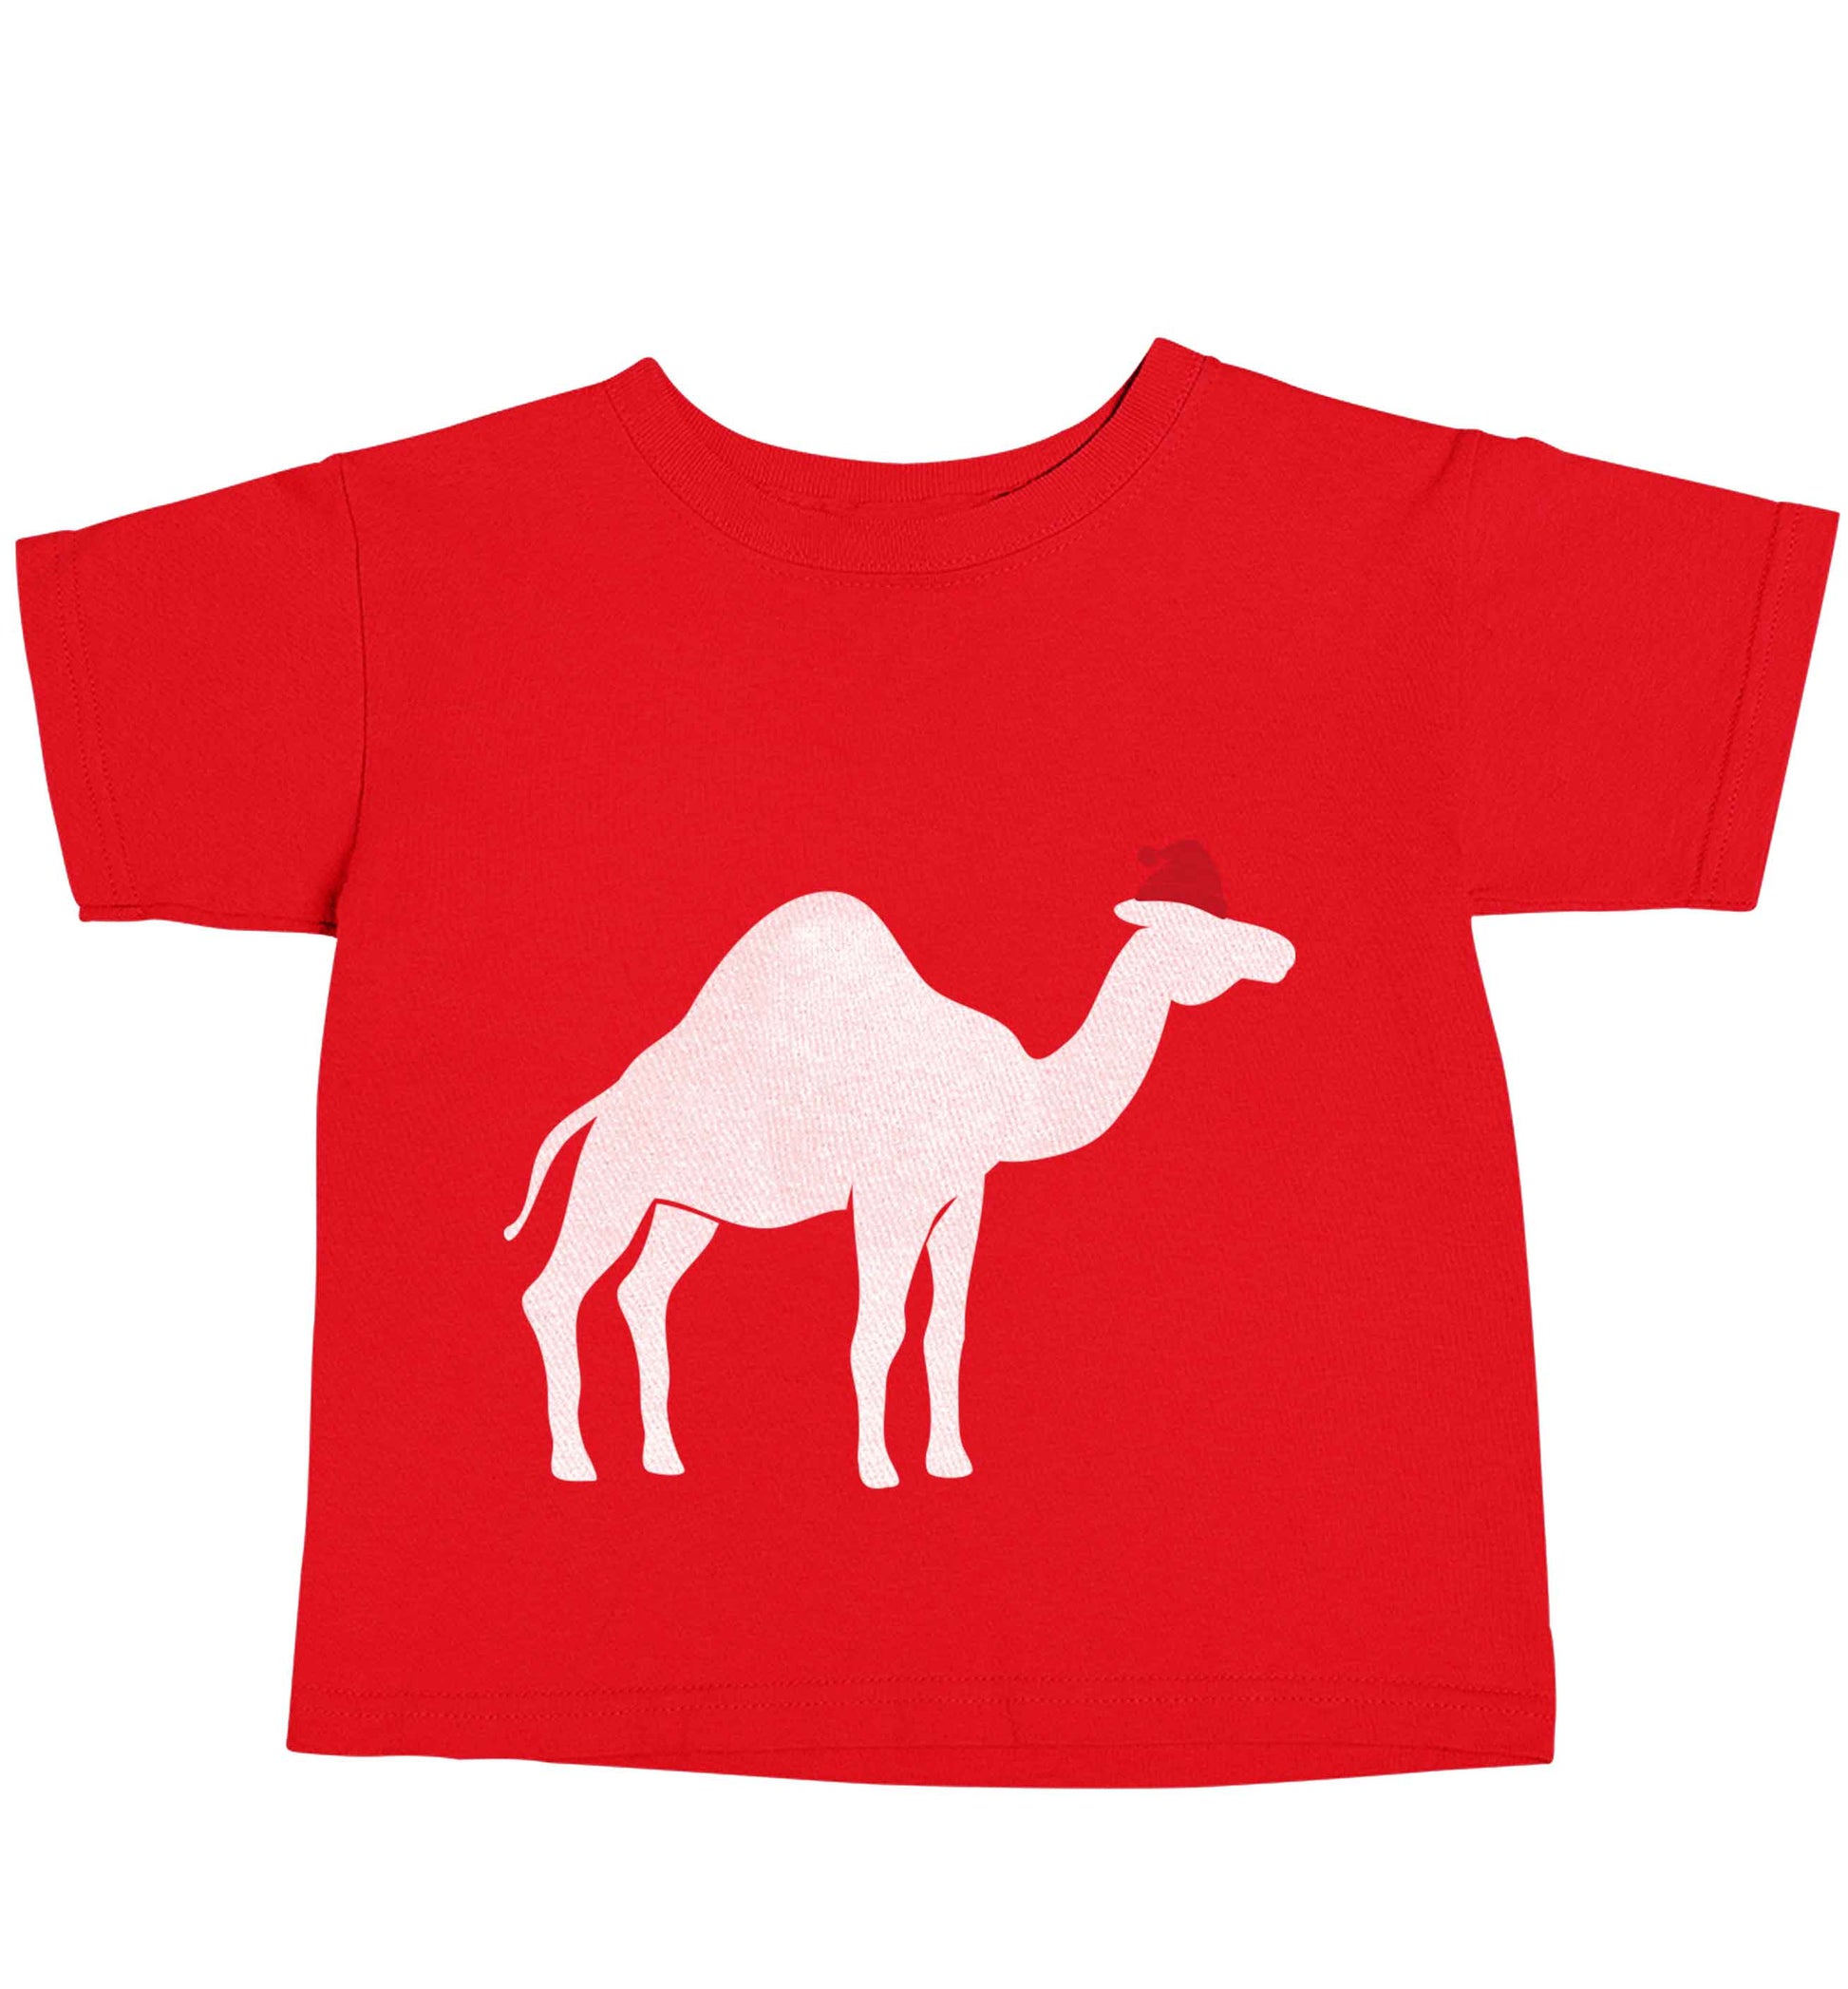 Blue camel santa red baby toddler Tshirt 2 Years